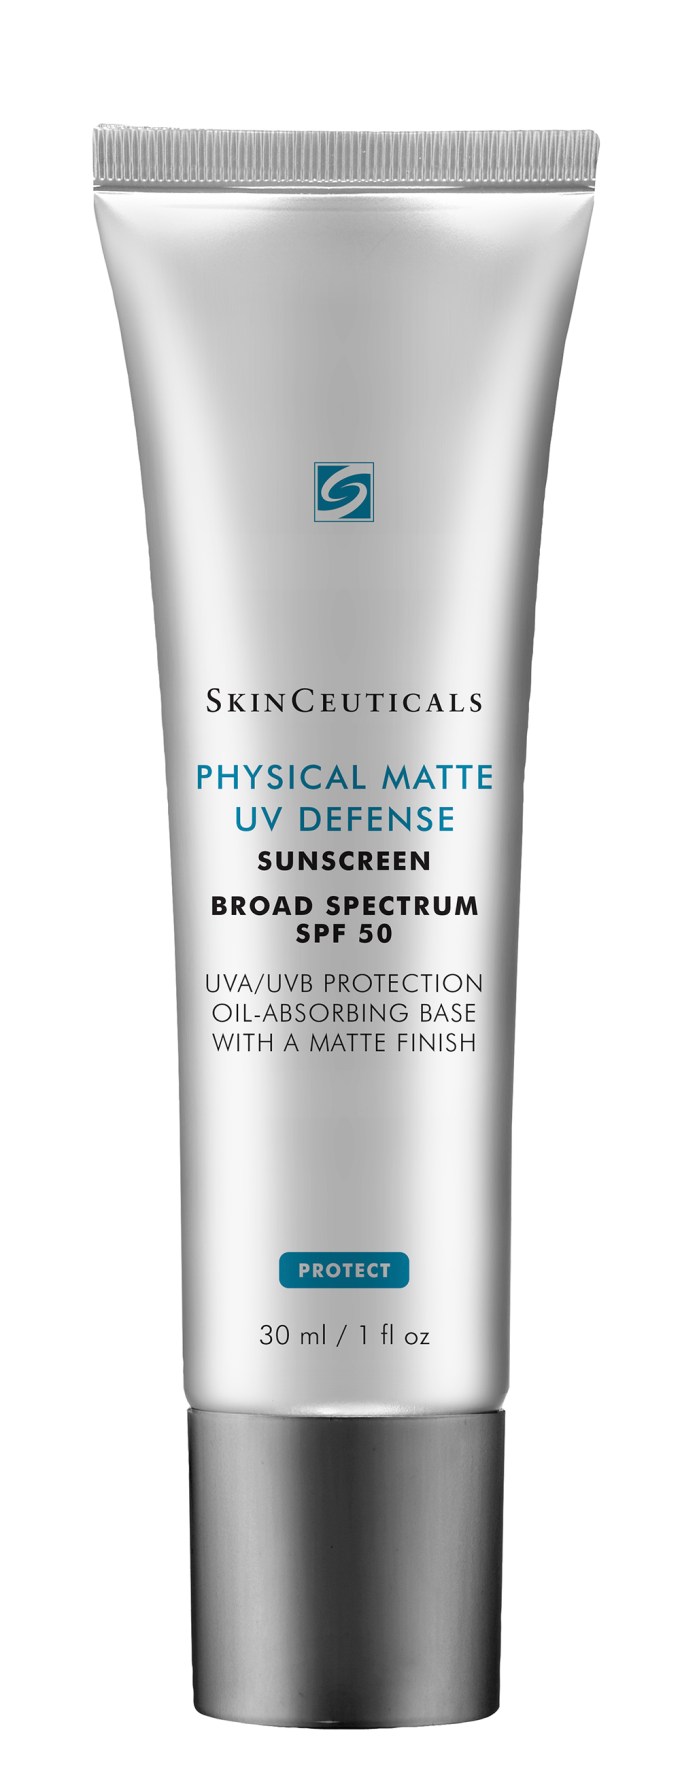 SkinCeuticals Physical Matte UV Defense SPF 50, $34, SkinCeuticals.com